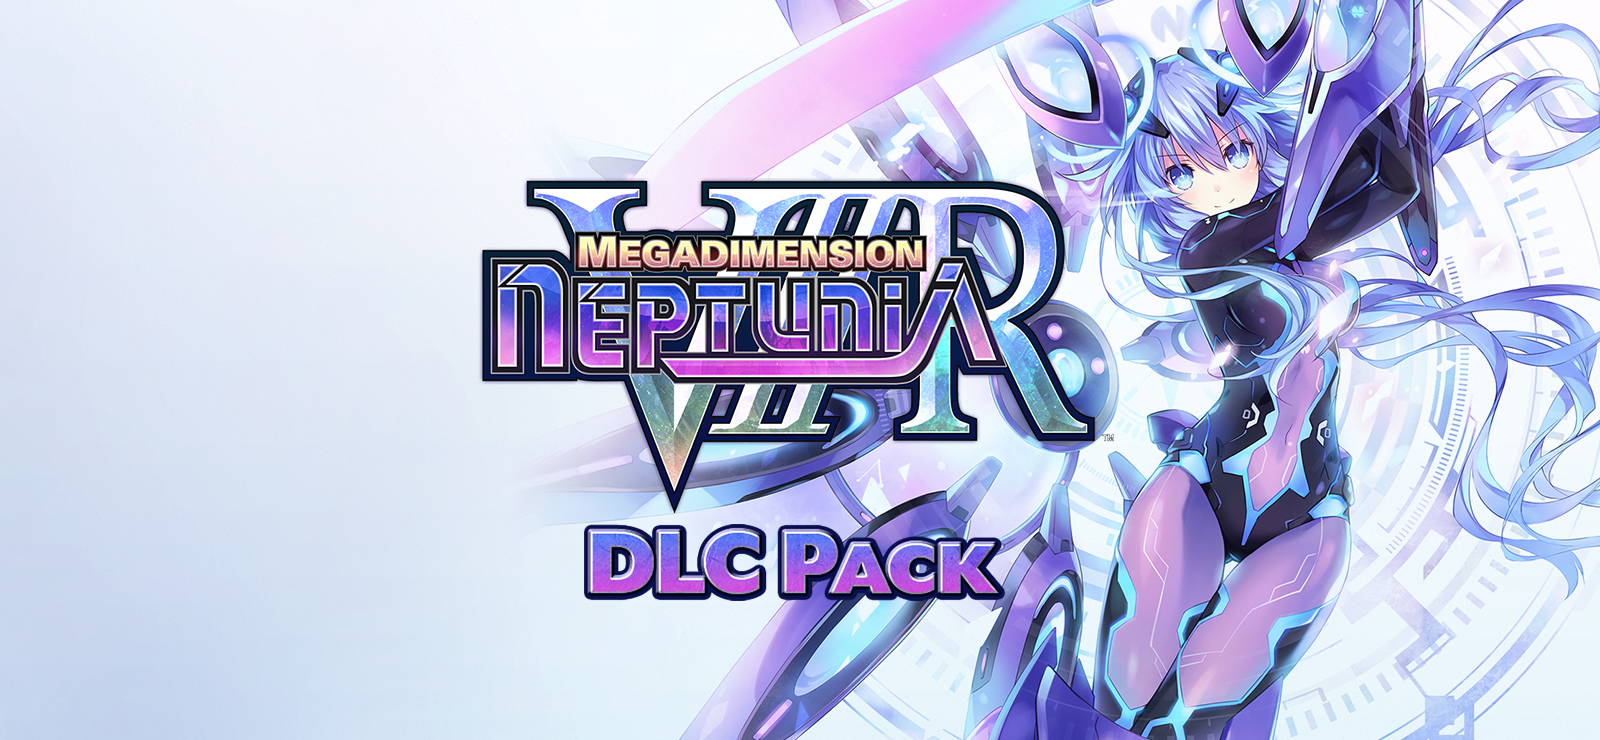 Megadimension Neptunia VIIR DLC Pack